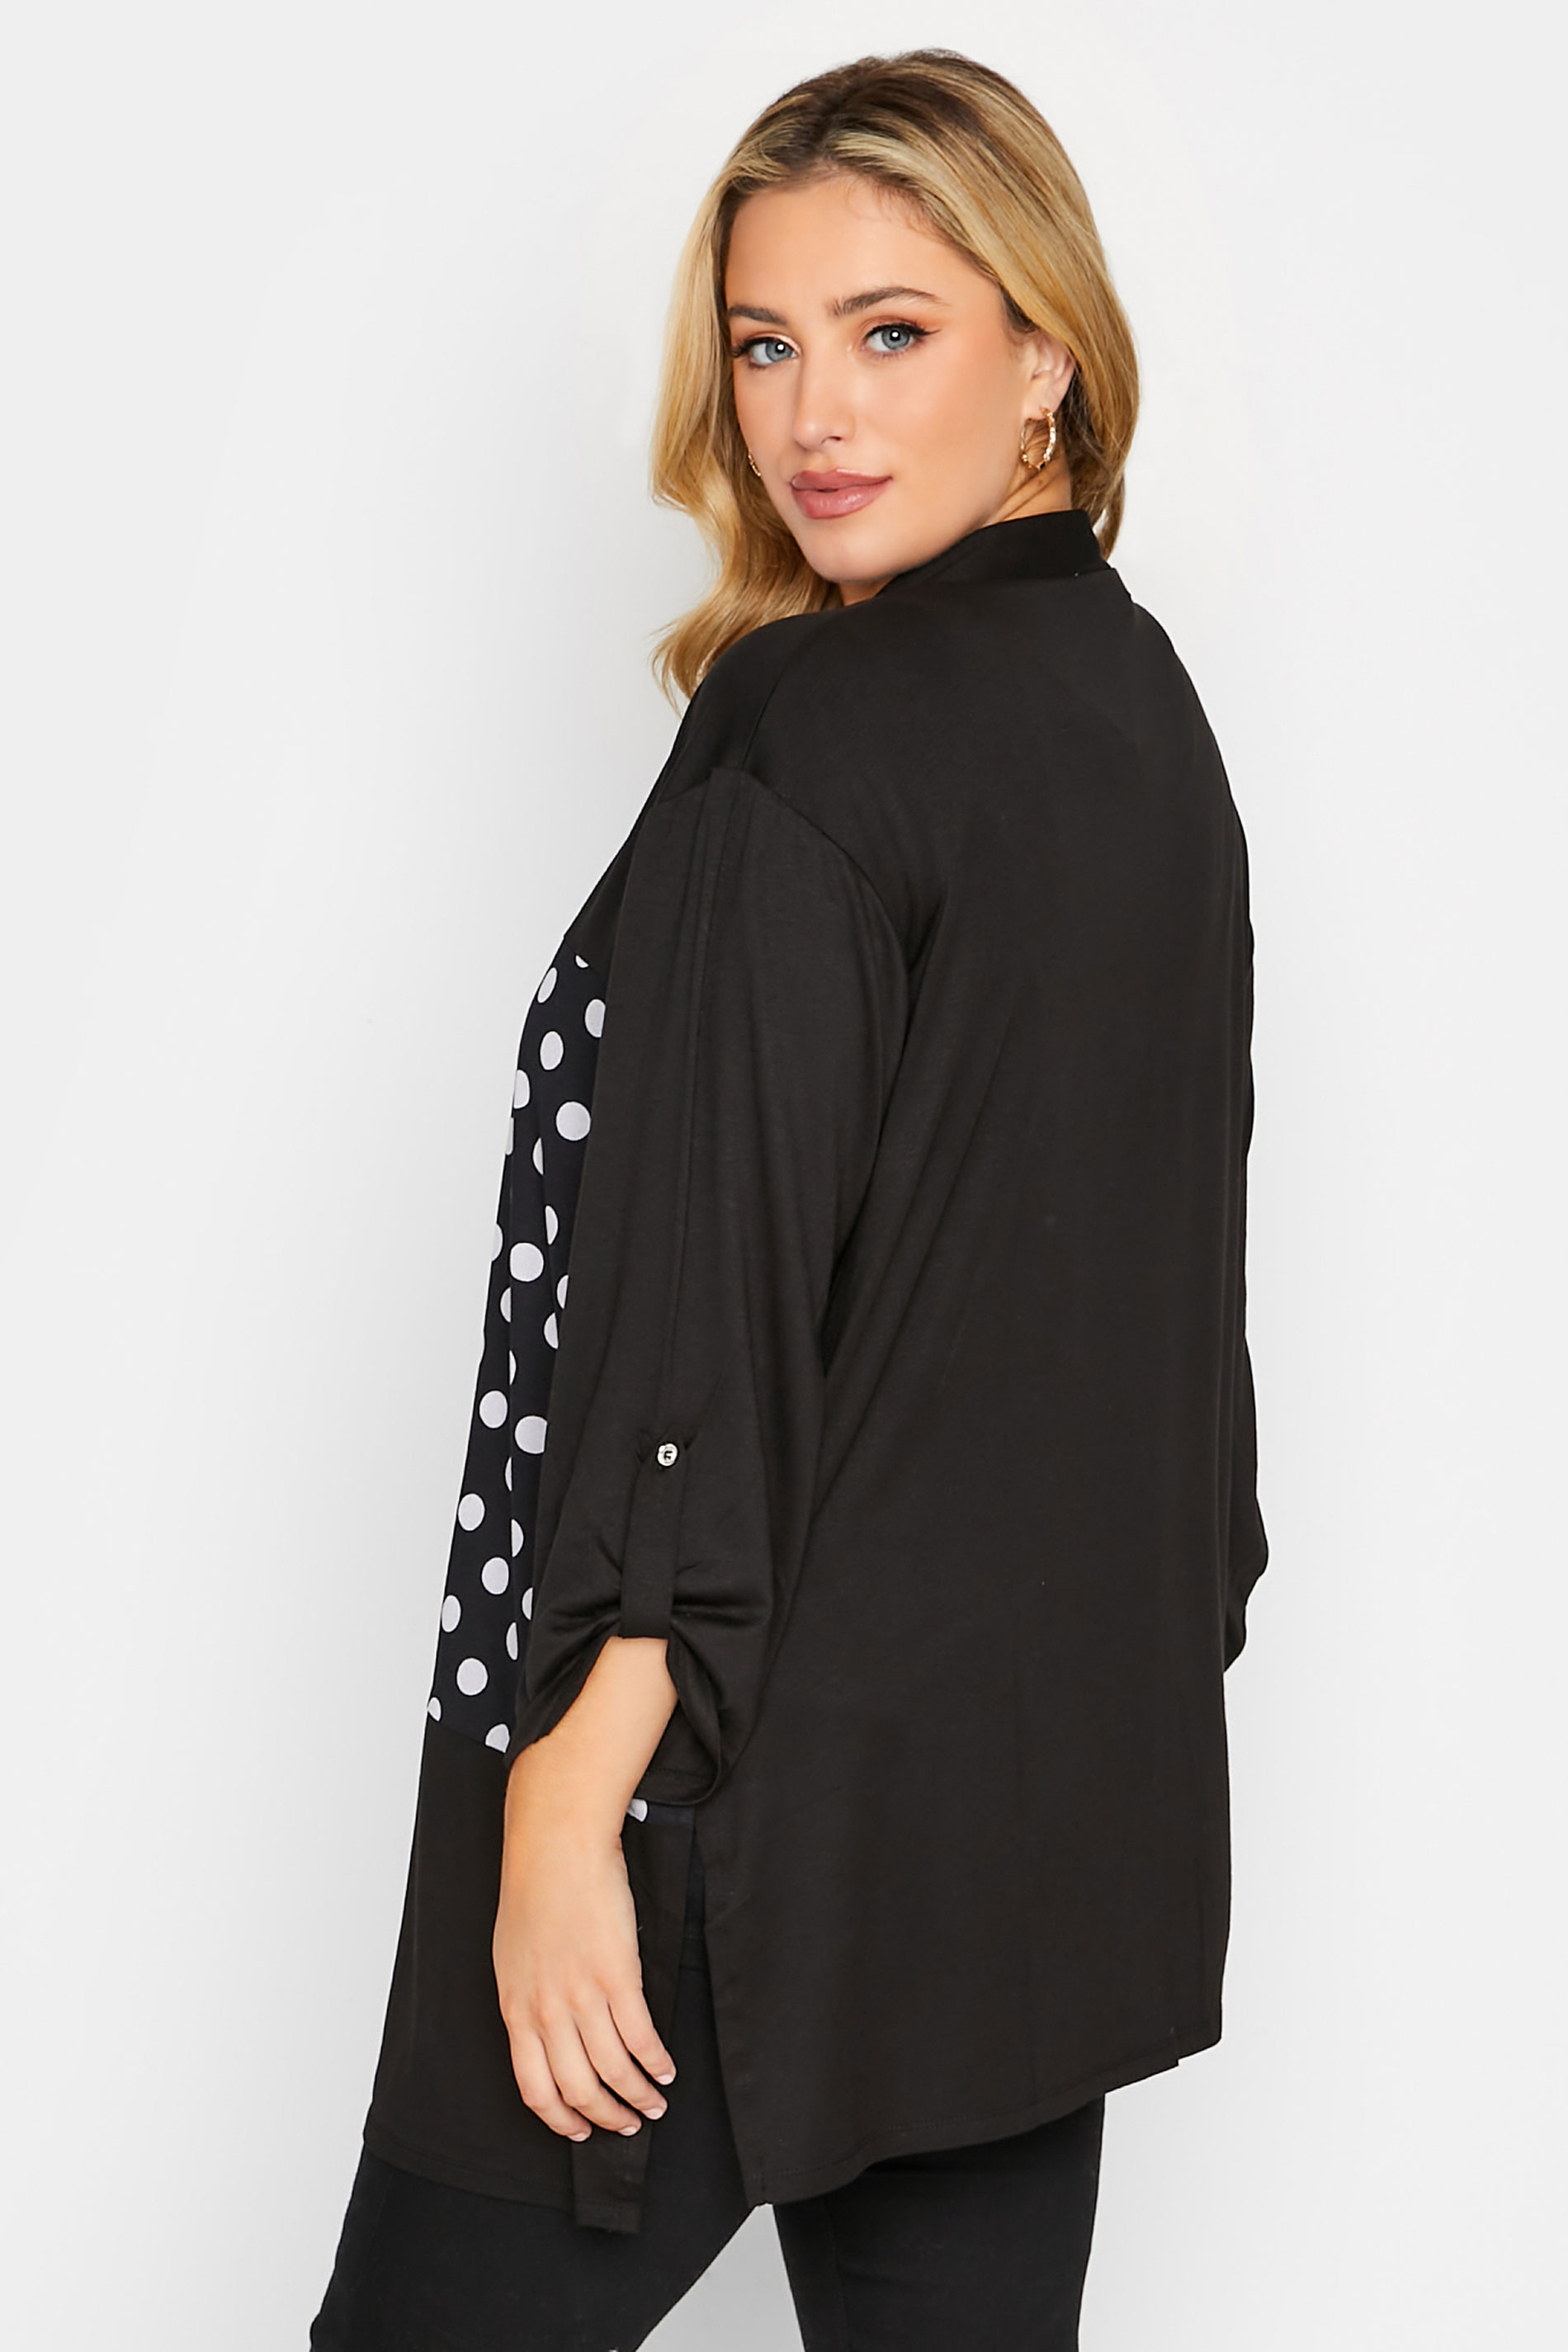 Plus Size Black Polka Dot Colour Block Cardigan | Yours Clothing 3